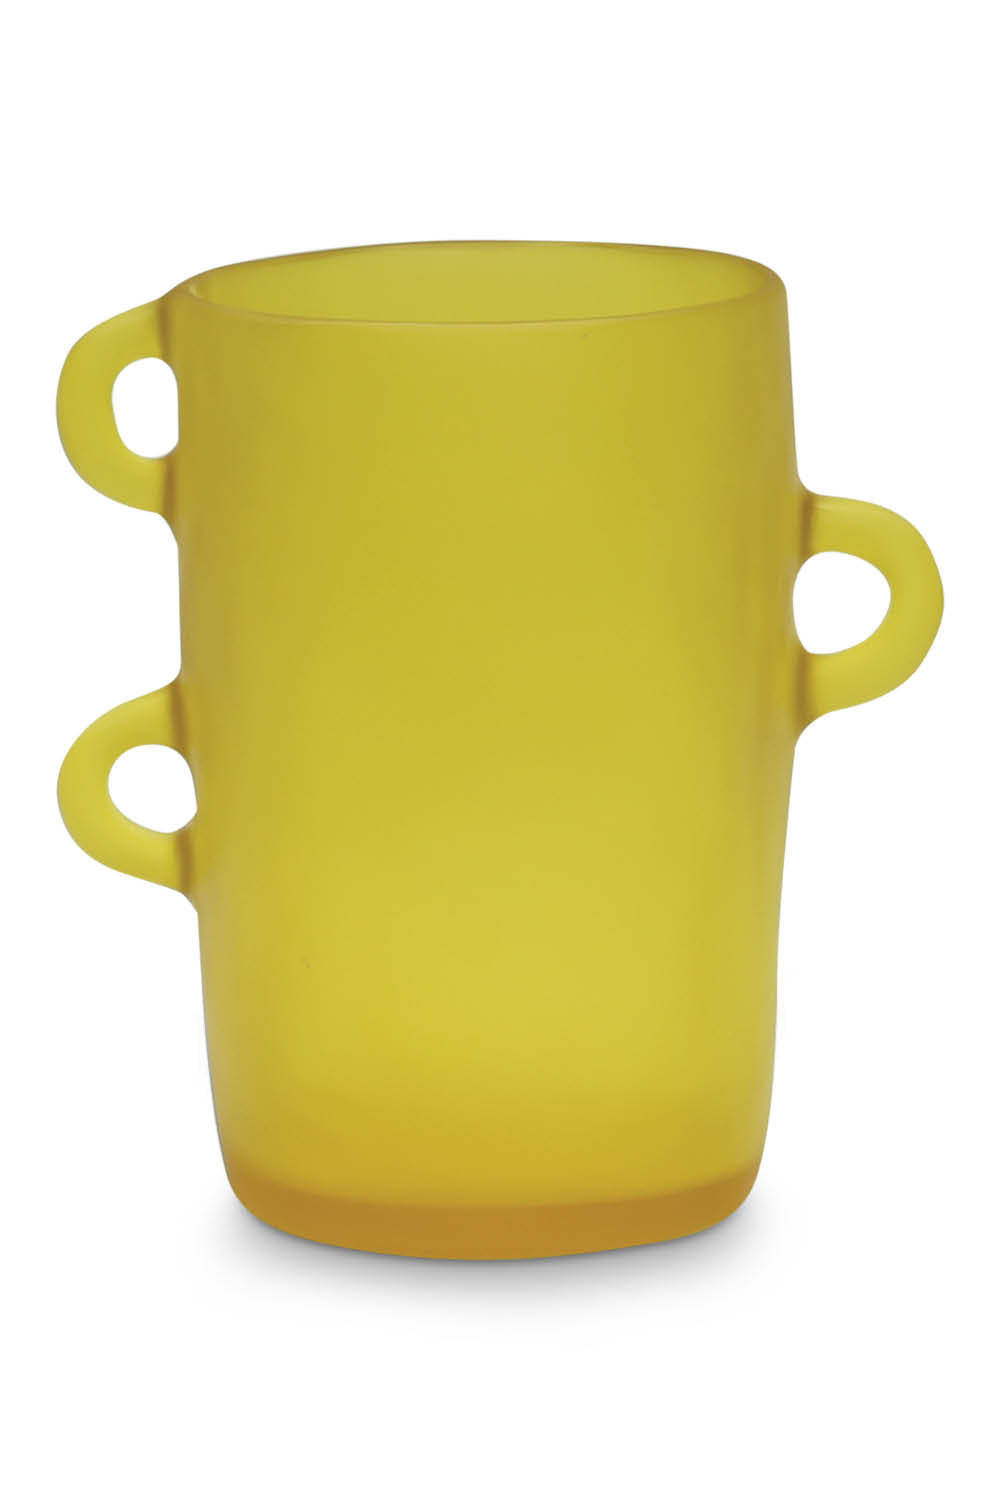 LOOPY Medium Vase in Yellow